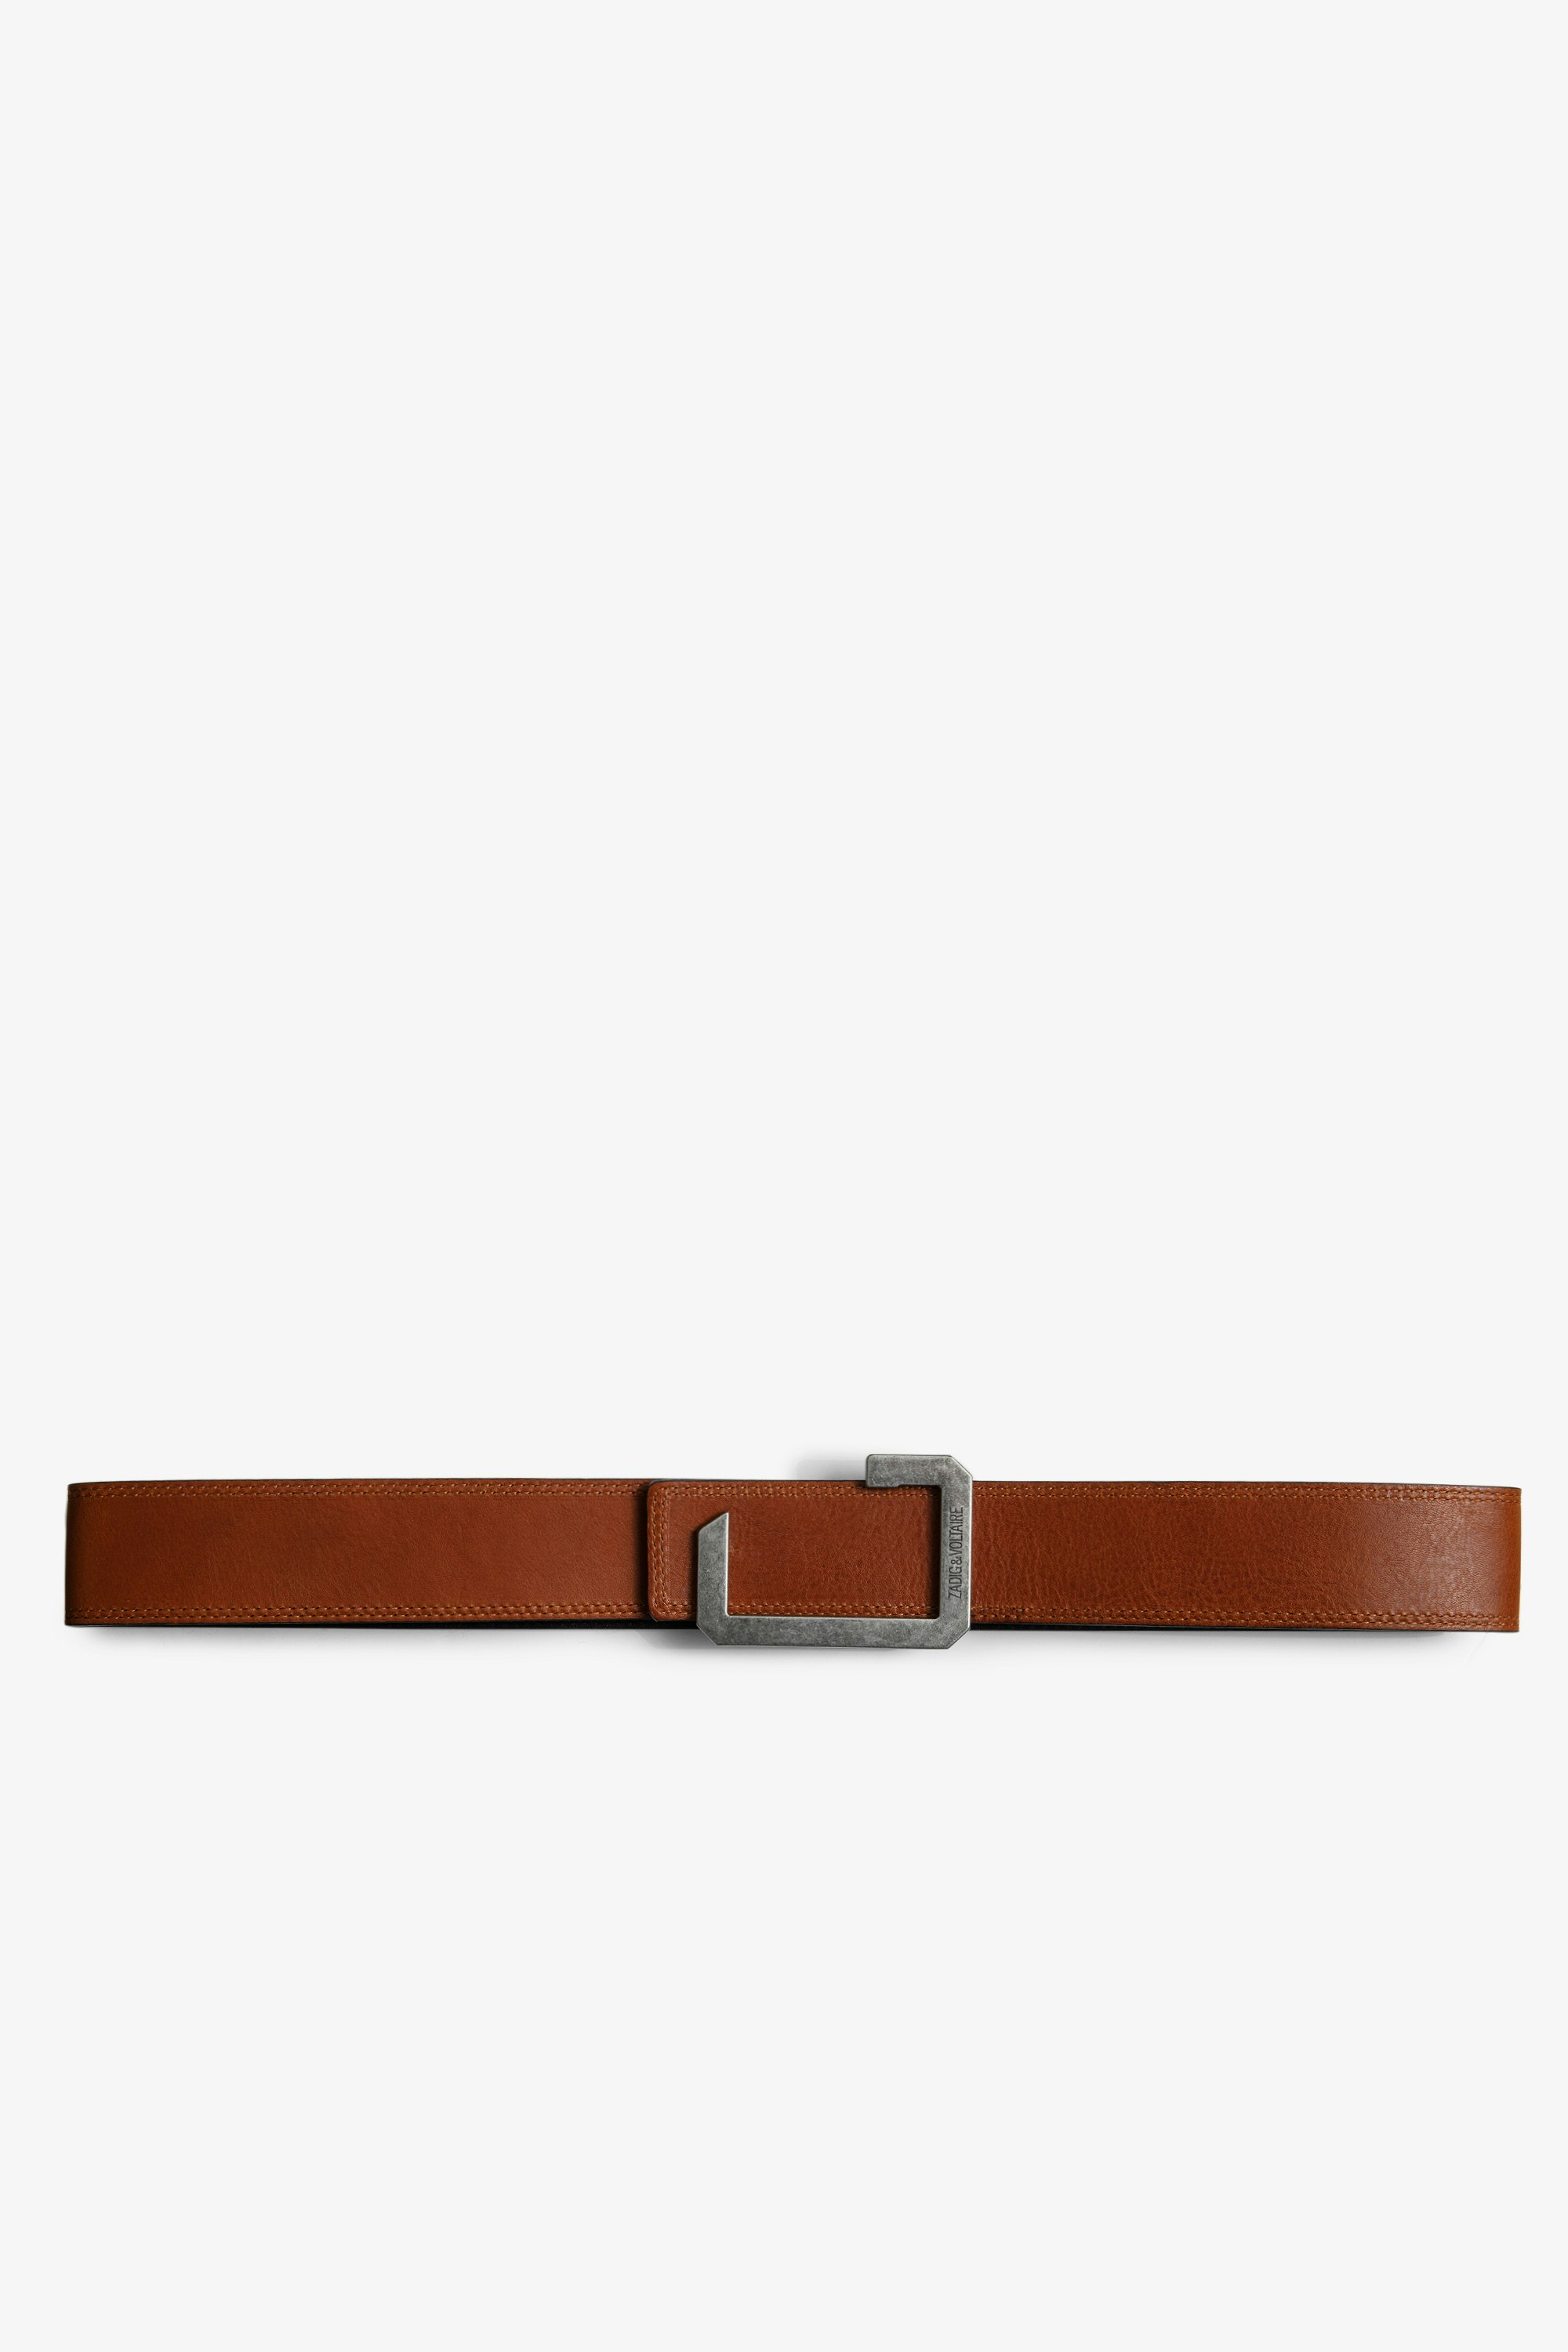 The Reversible Belt - Men's reversible cognac leather belt.